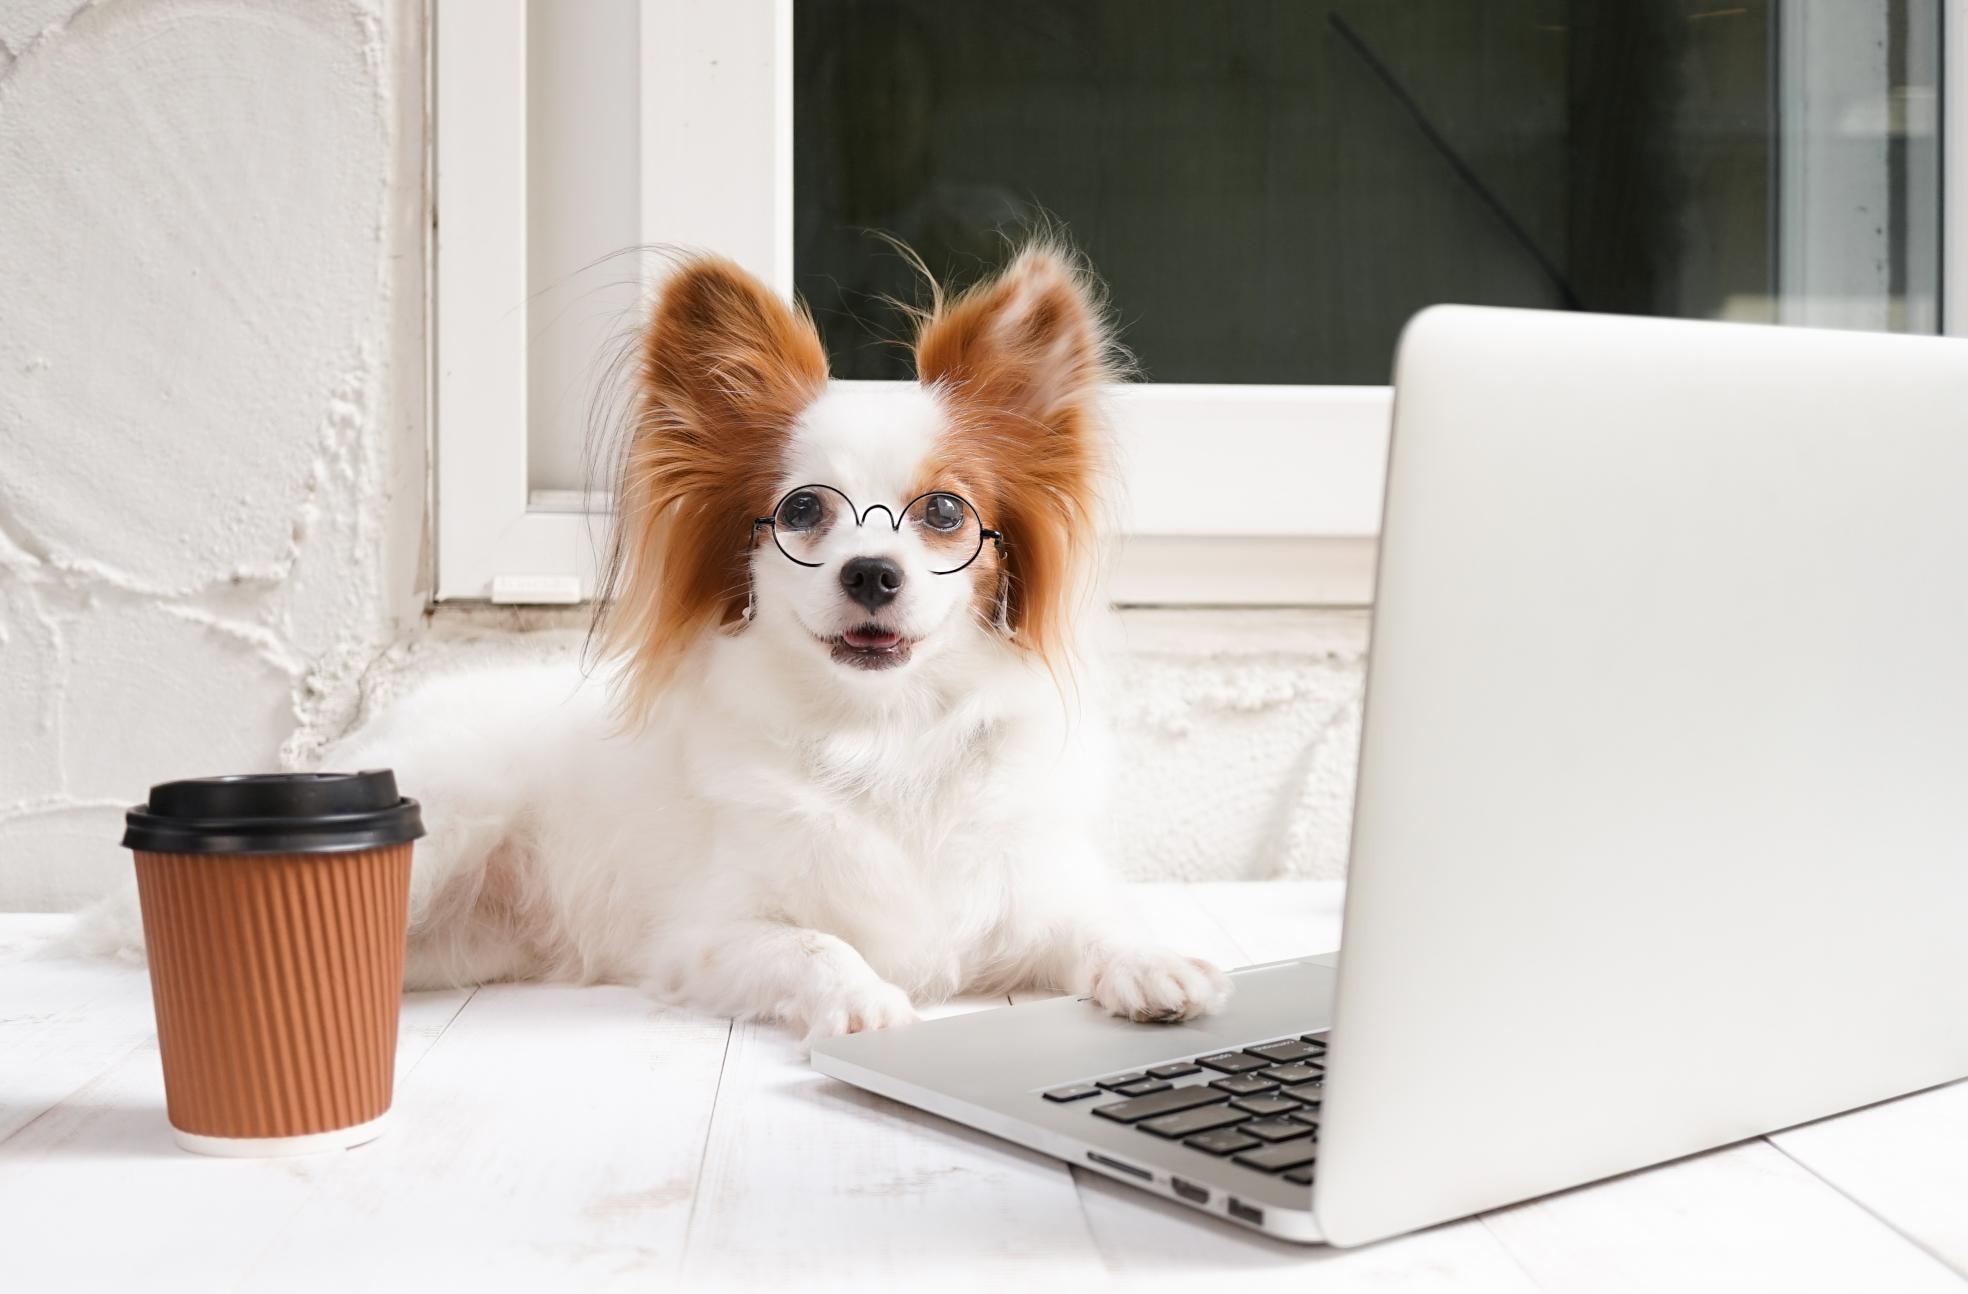 papillon dog wearing glasses using laptop.